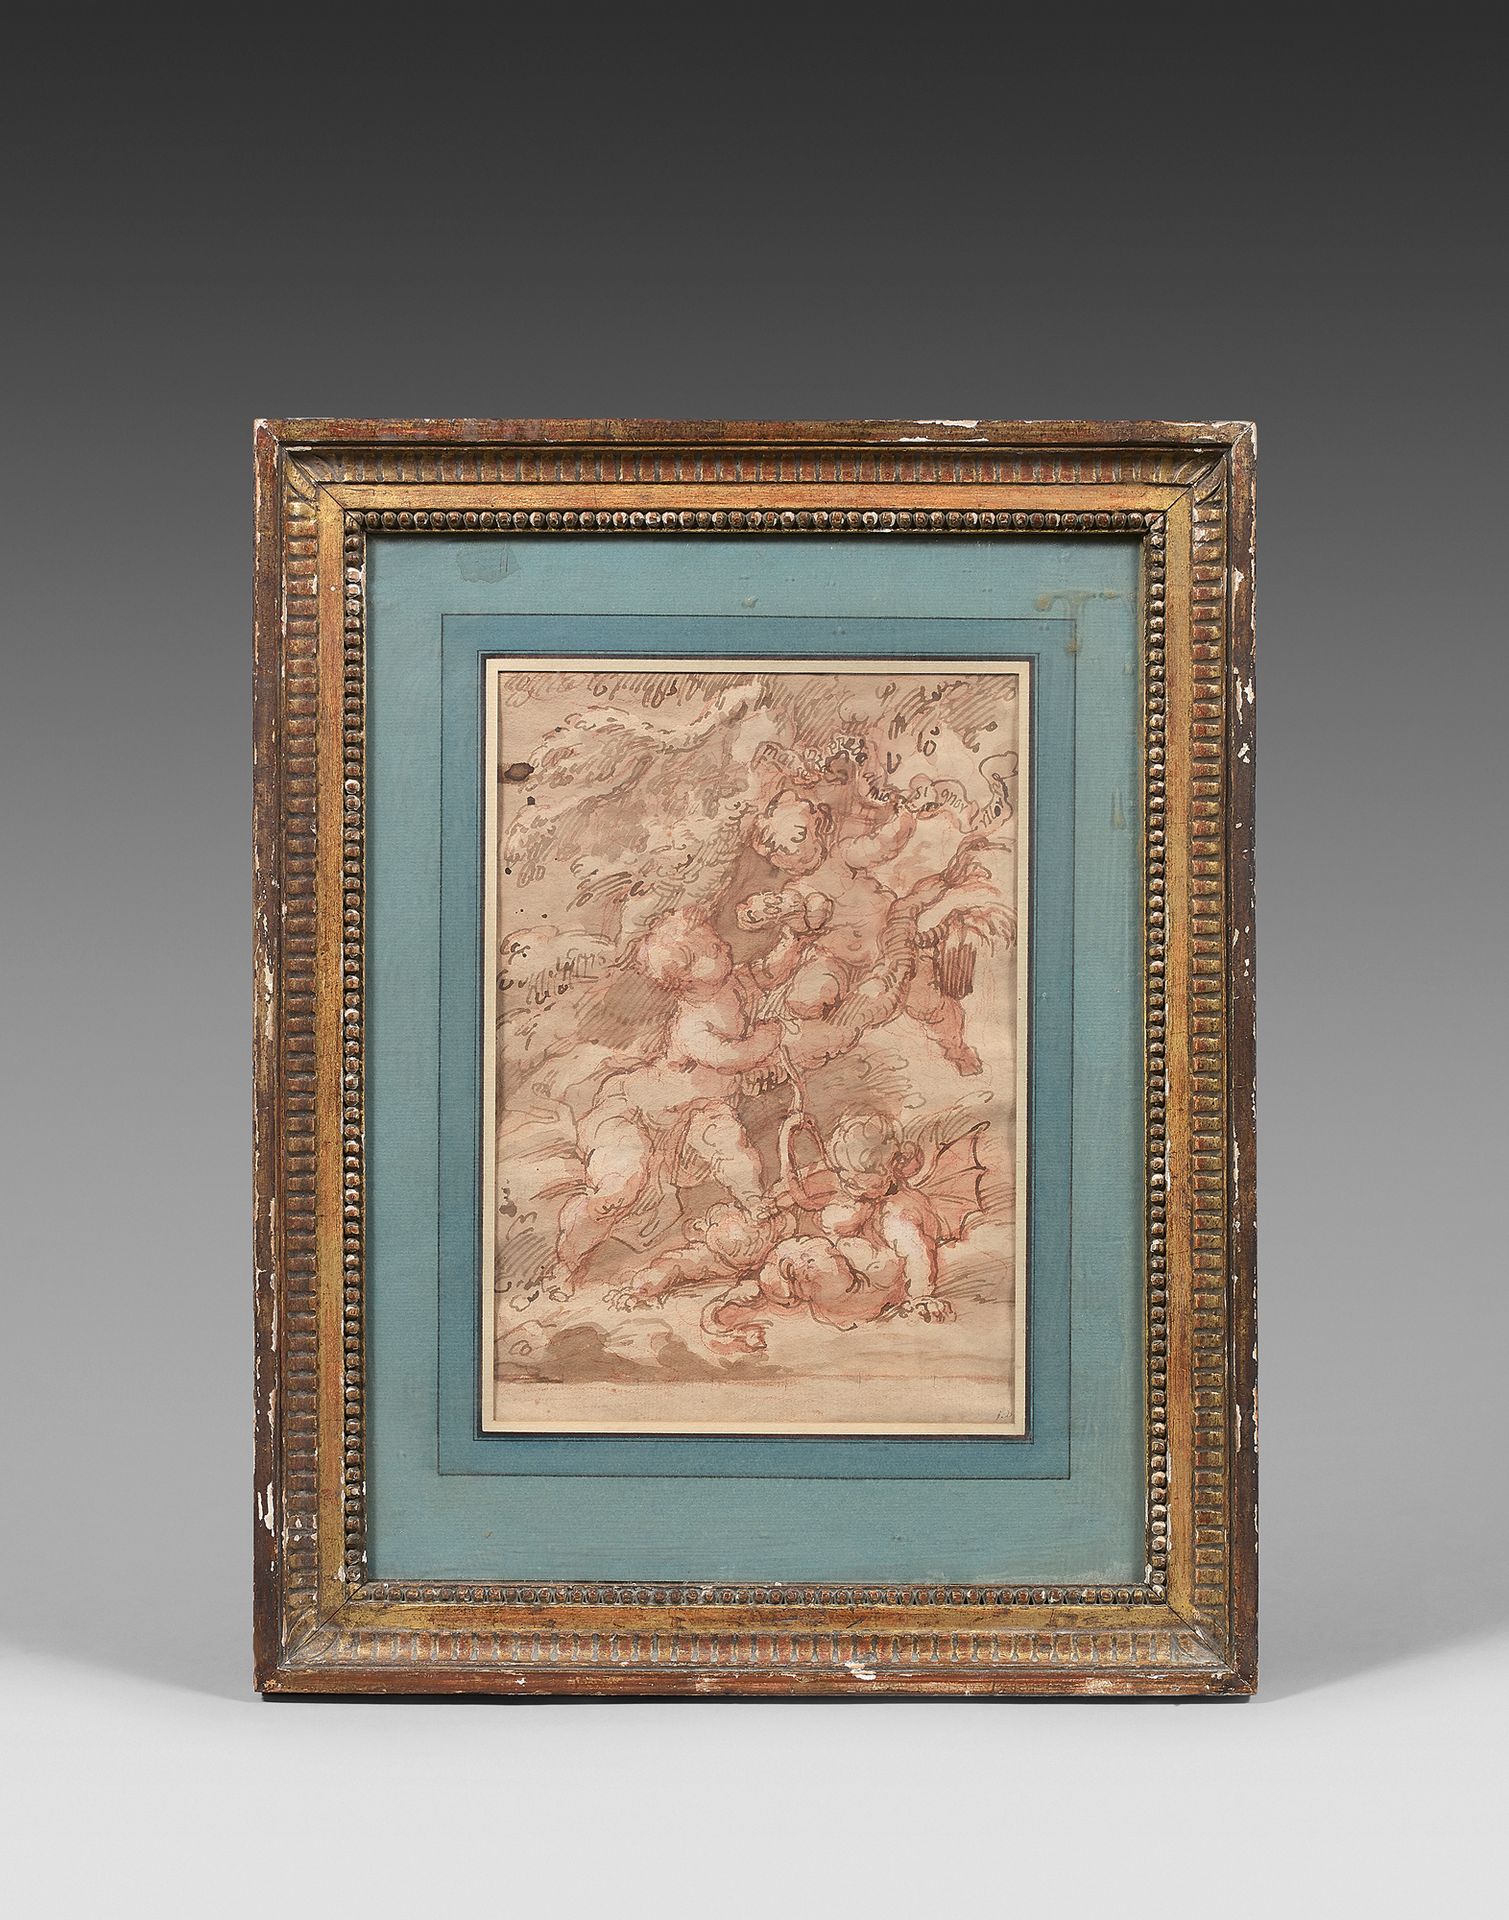 École ITALIENNE du XVIIIe siècle Putti
Aguada marrón y tiza roja
27,5 x 19 cm